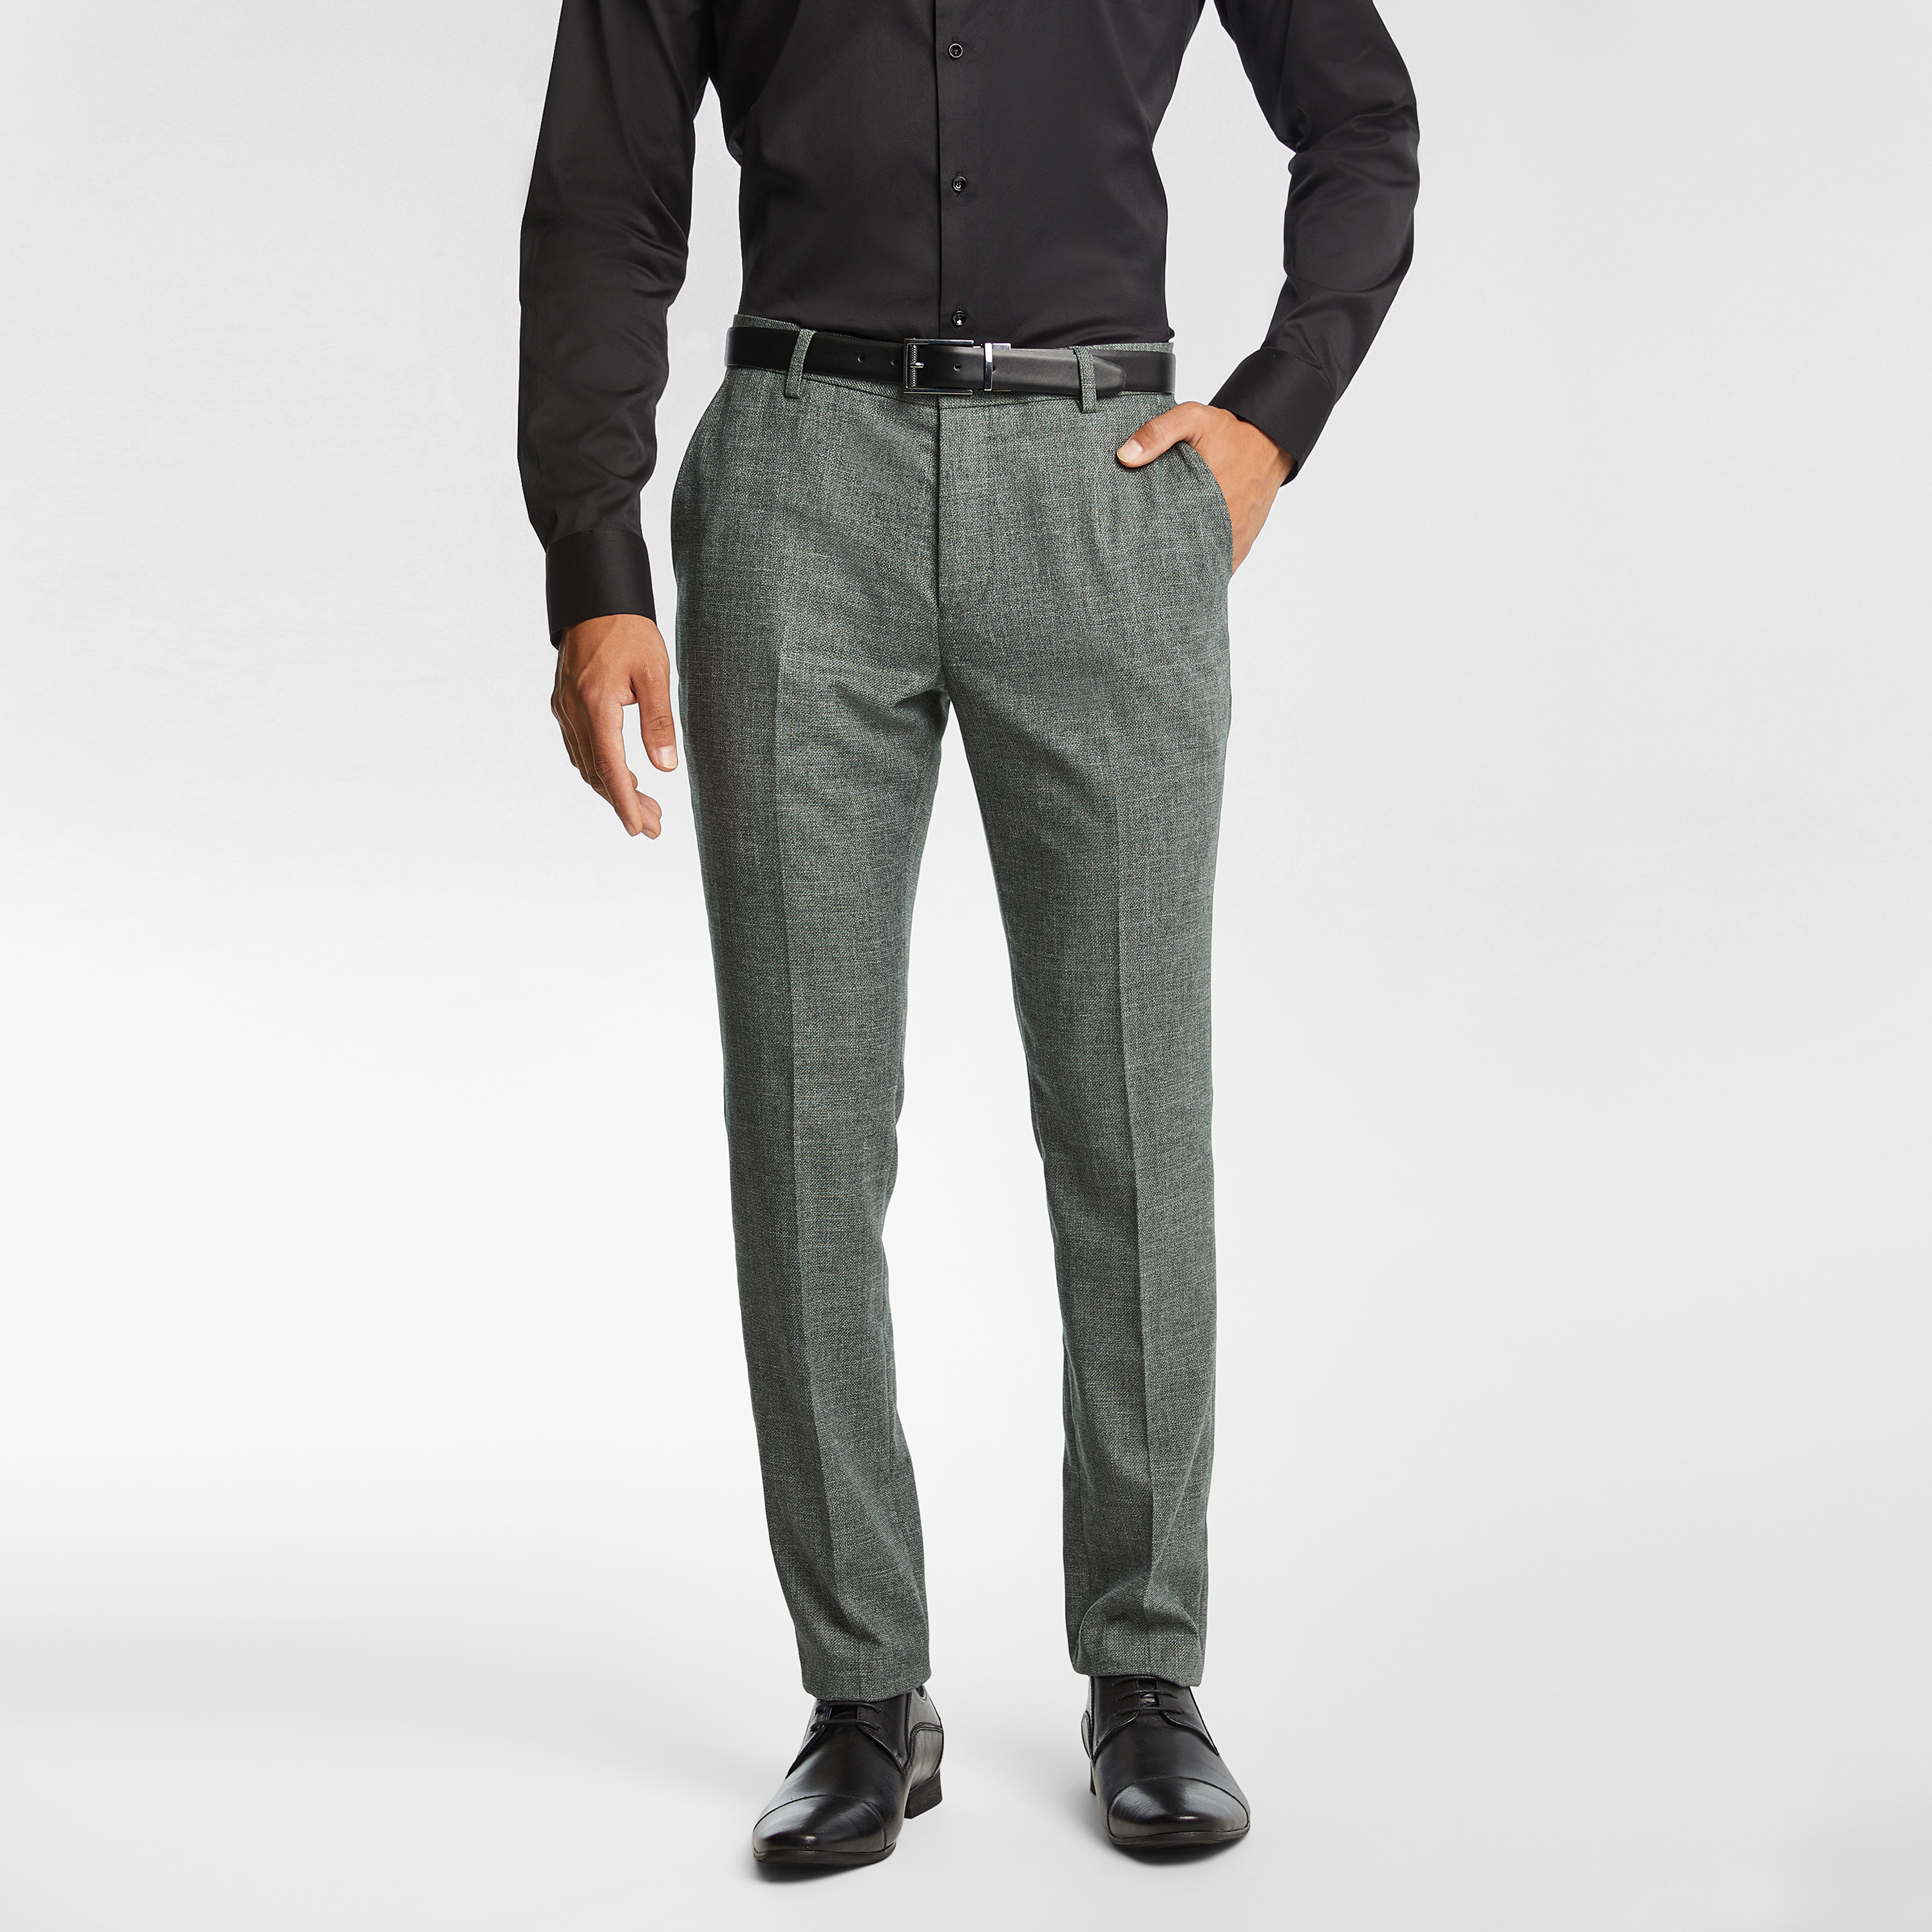 Black shirt men's formal outfit for office wear. Grey pants | Brown brogue  shoes | Brown Belt | Mens formal outfits, Black shirt, Mens formal wear